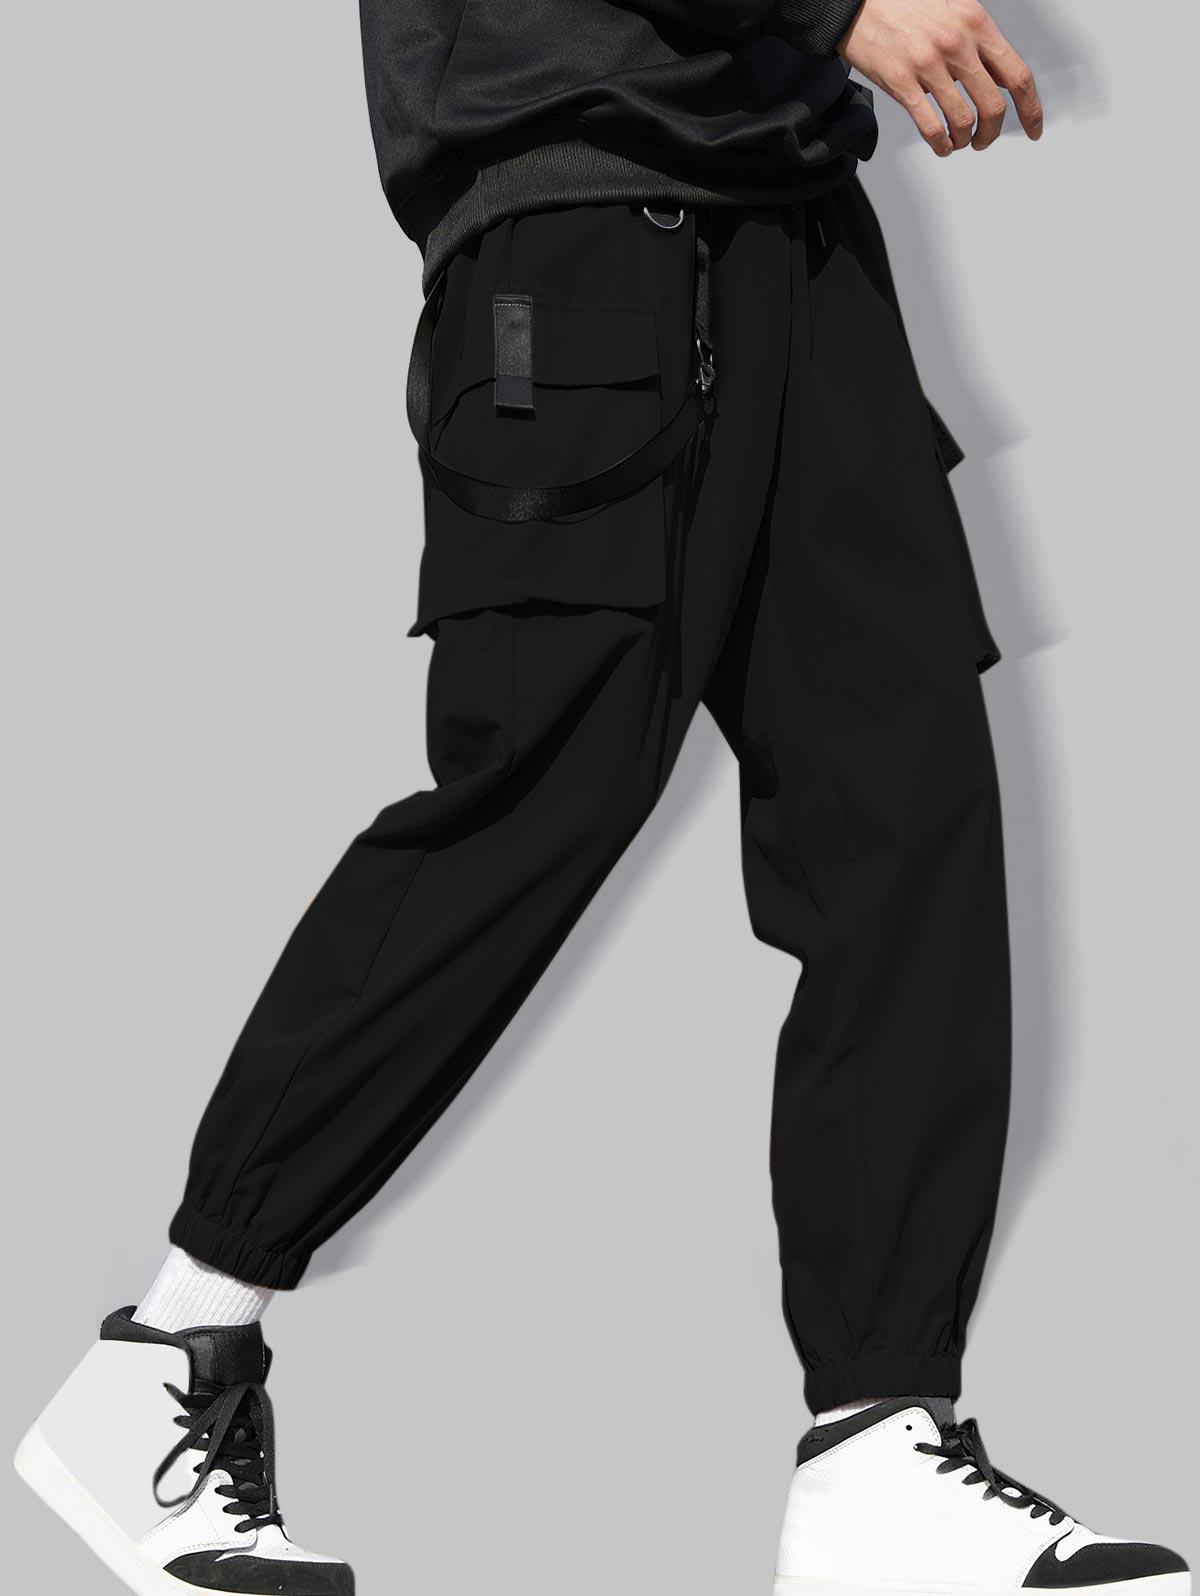 ZAFUL Men's Strap Design Solid Color Streetwear Cargo Pants L Black